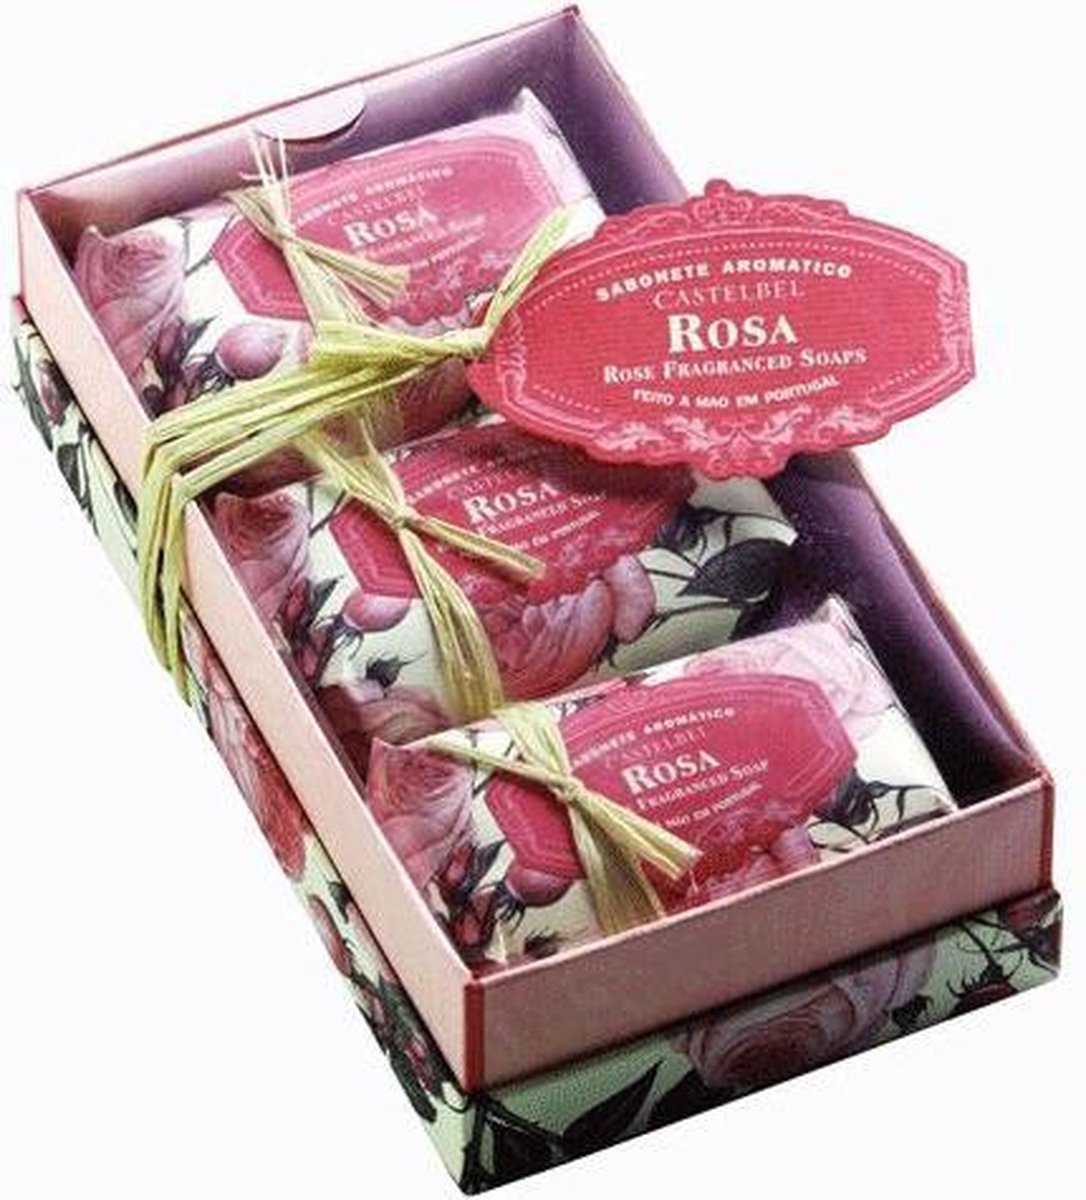 SINT Kerst cadeau Castelbel - Zeepset Rosa 3 x 150 gr (rozen)